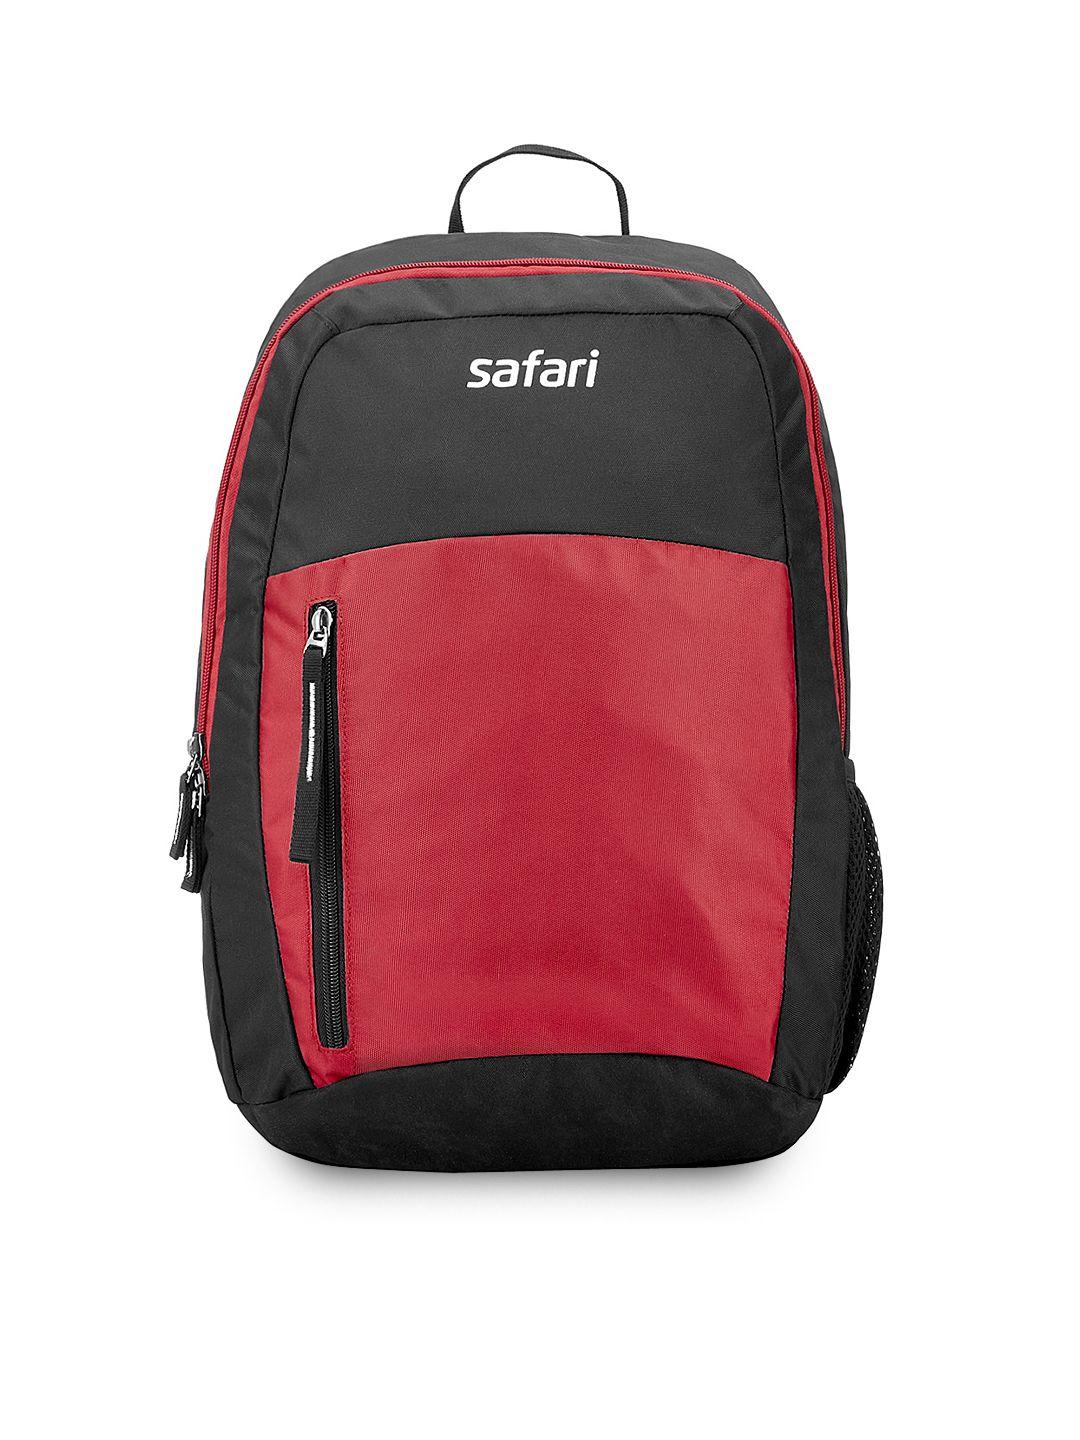 safari unisex red & black colourblocked backpack